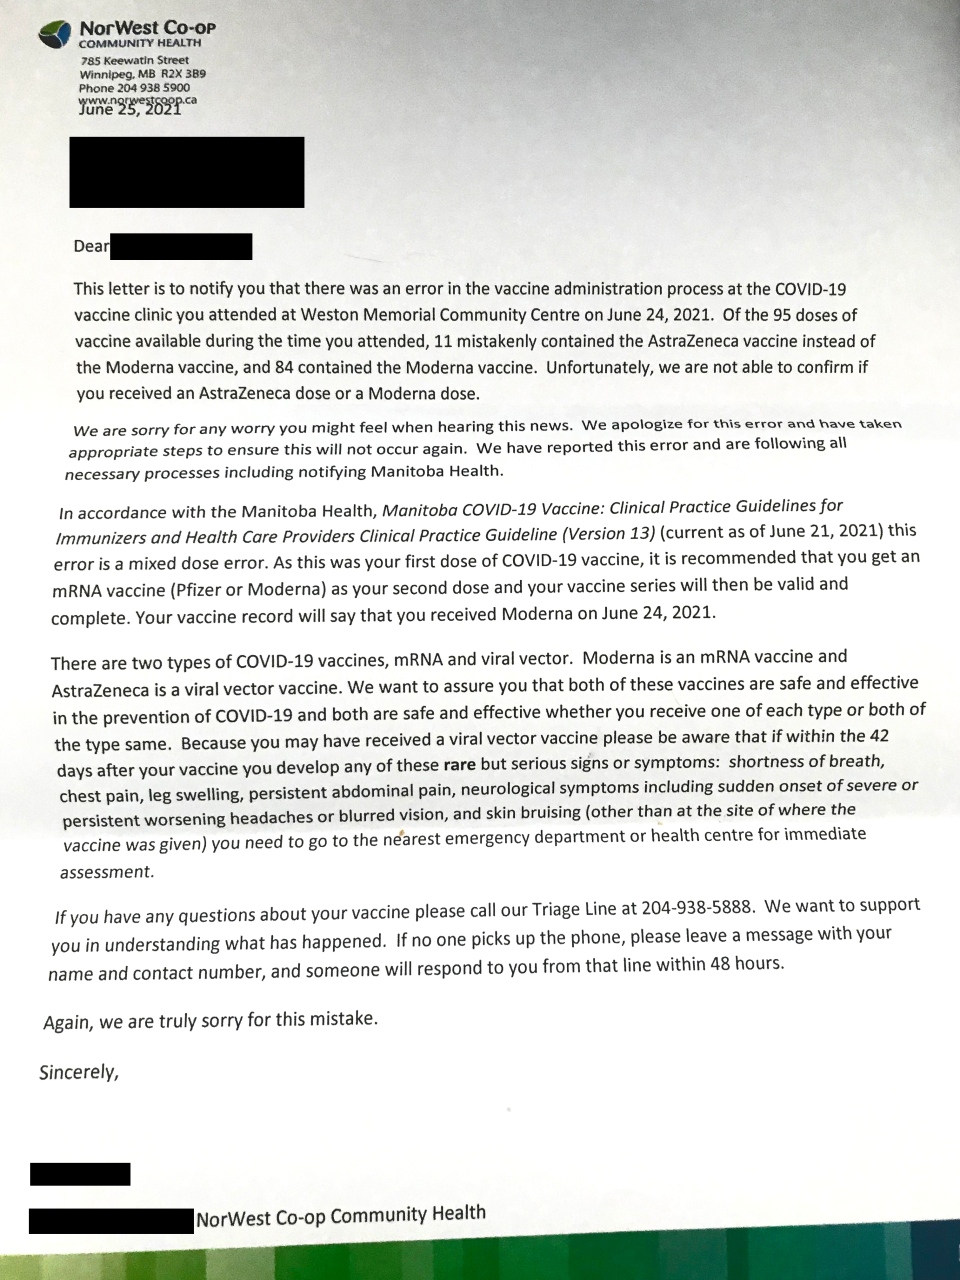 NorWest Co-op Community Health letter